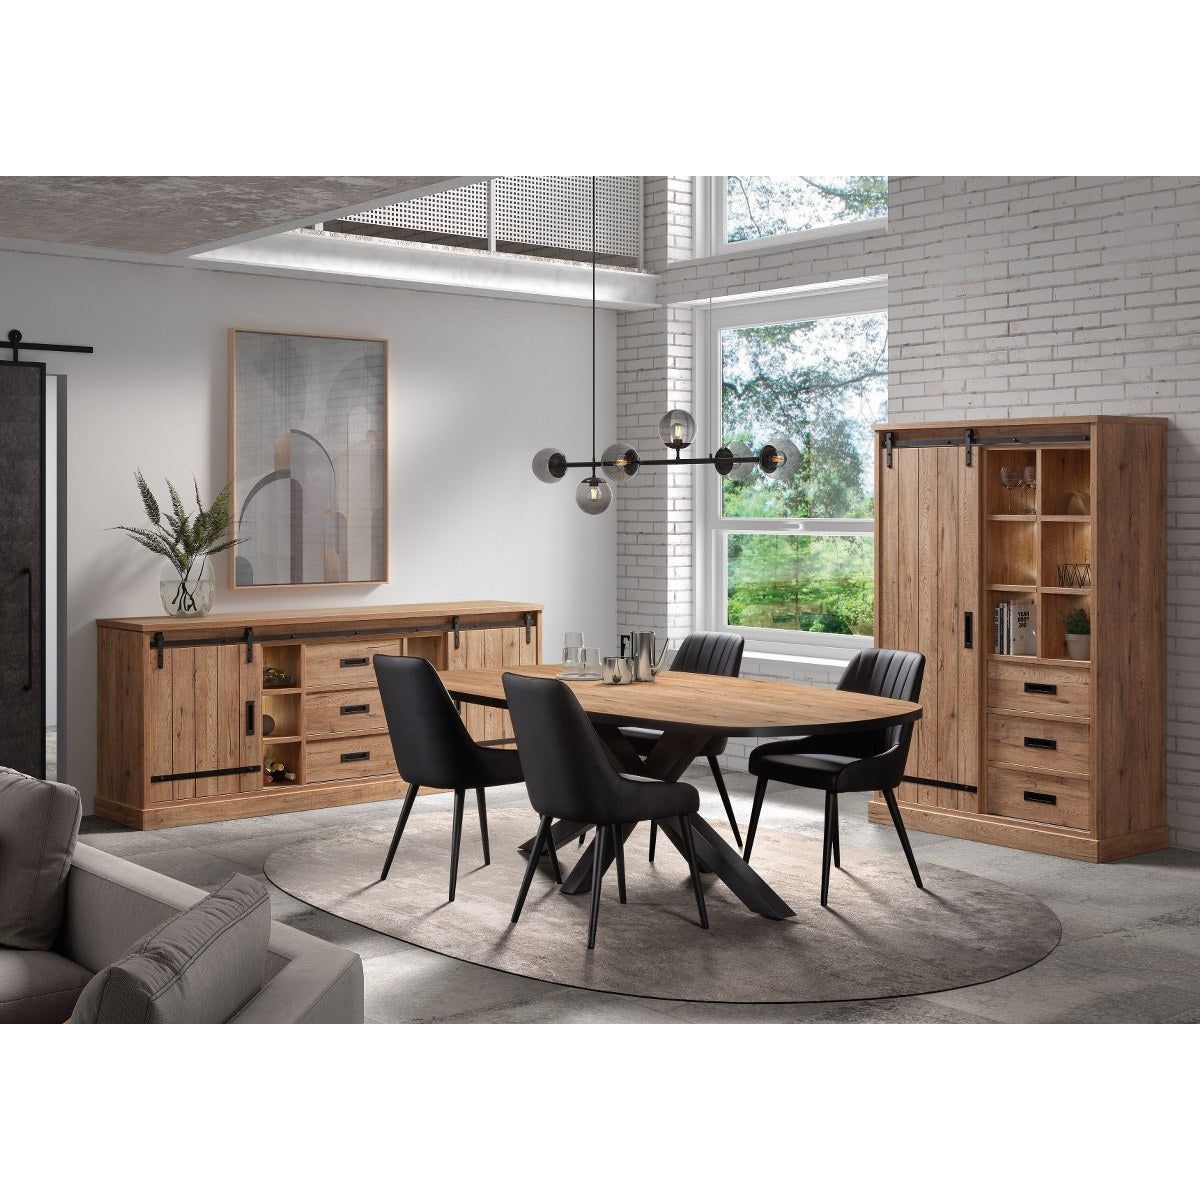 Wall cabinet / display cabinet | Furniture series Albert | brown,